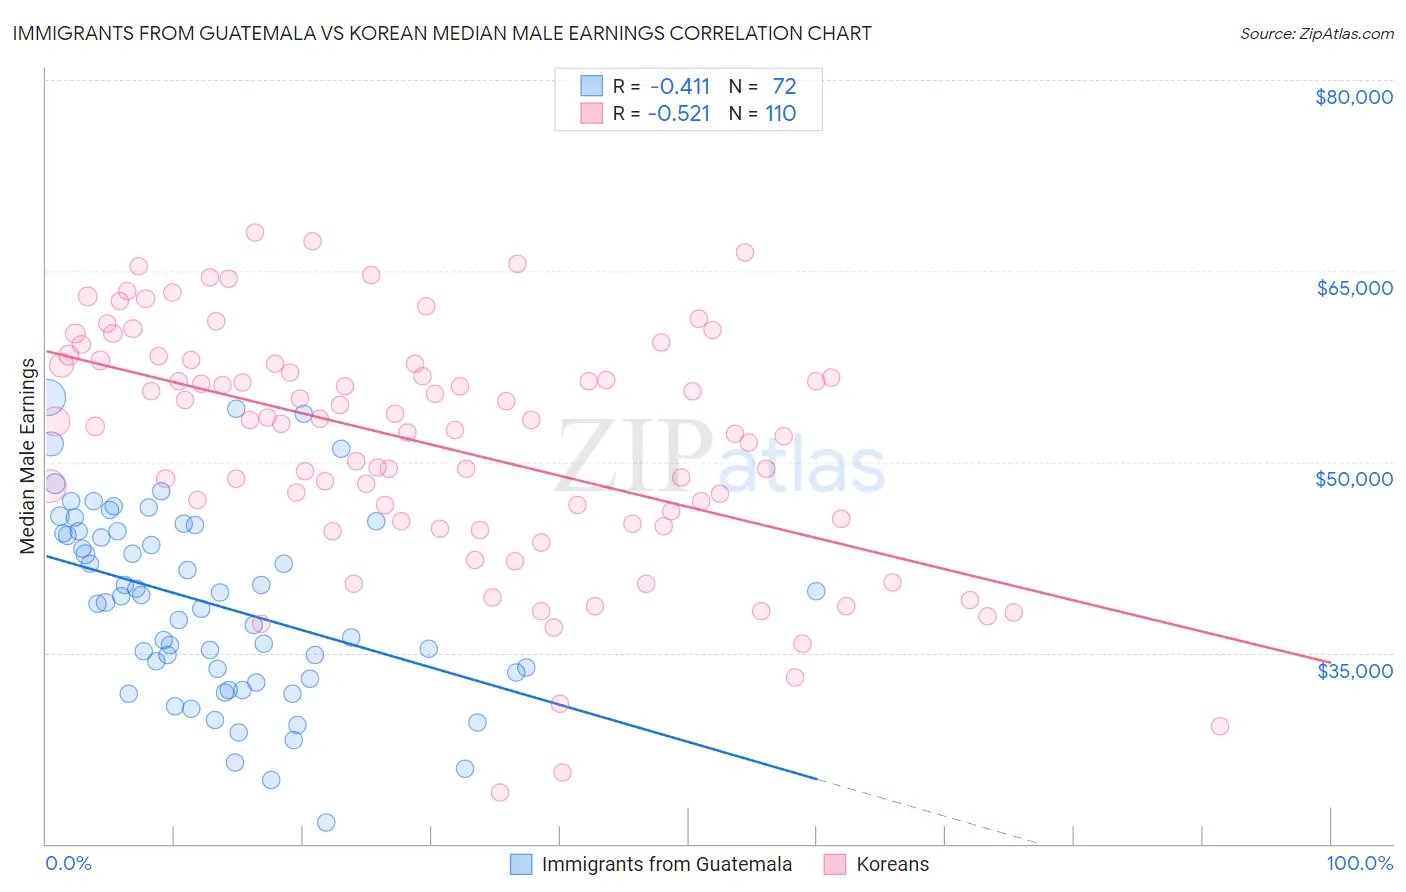 Immigrants from Guatemala vs Korean Median Male Earnings